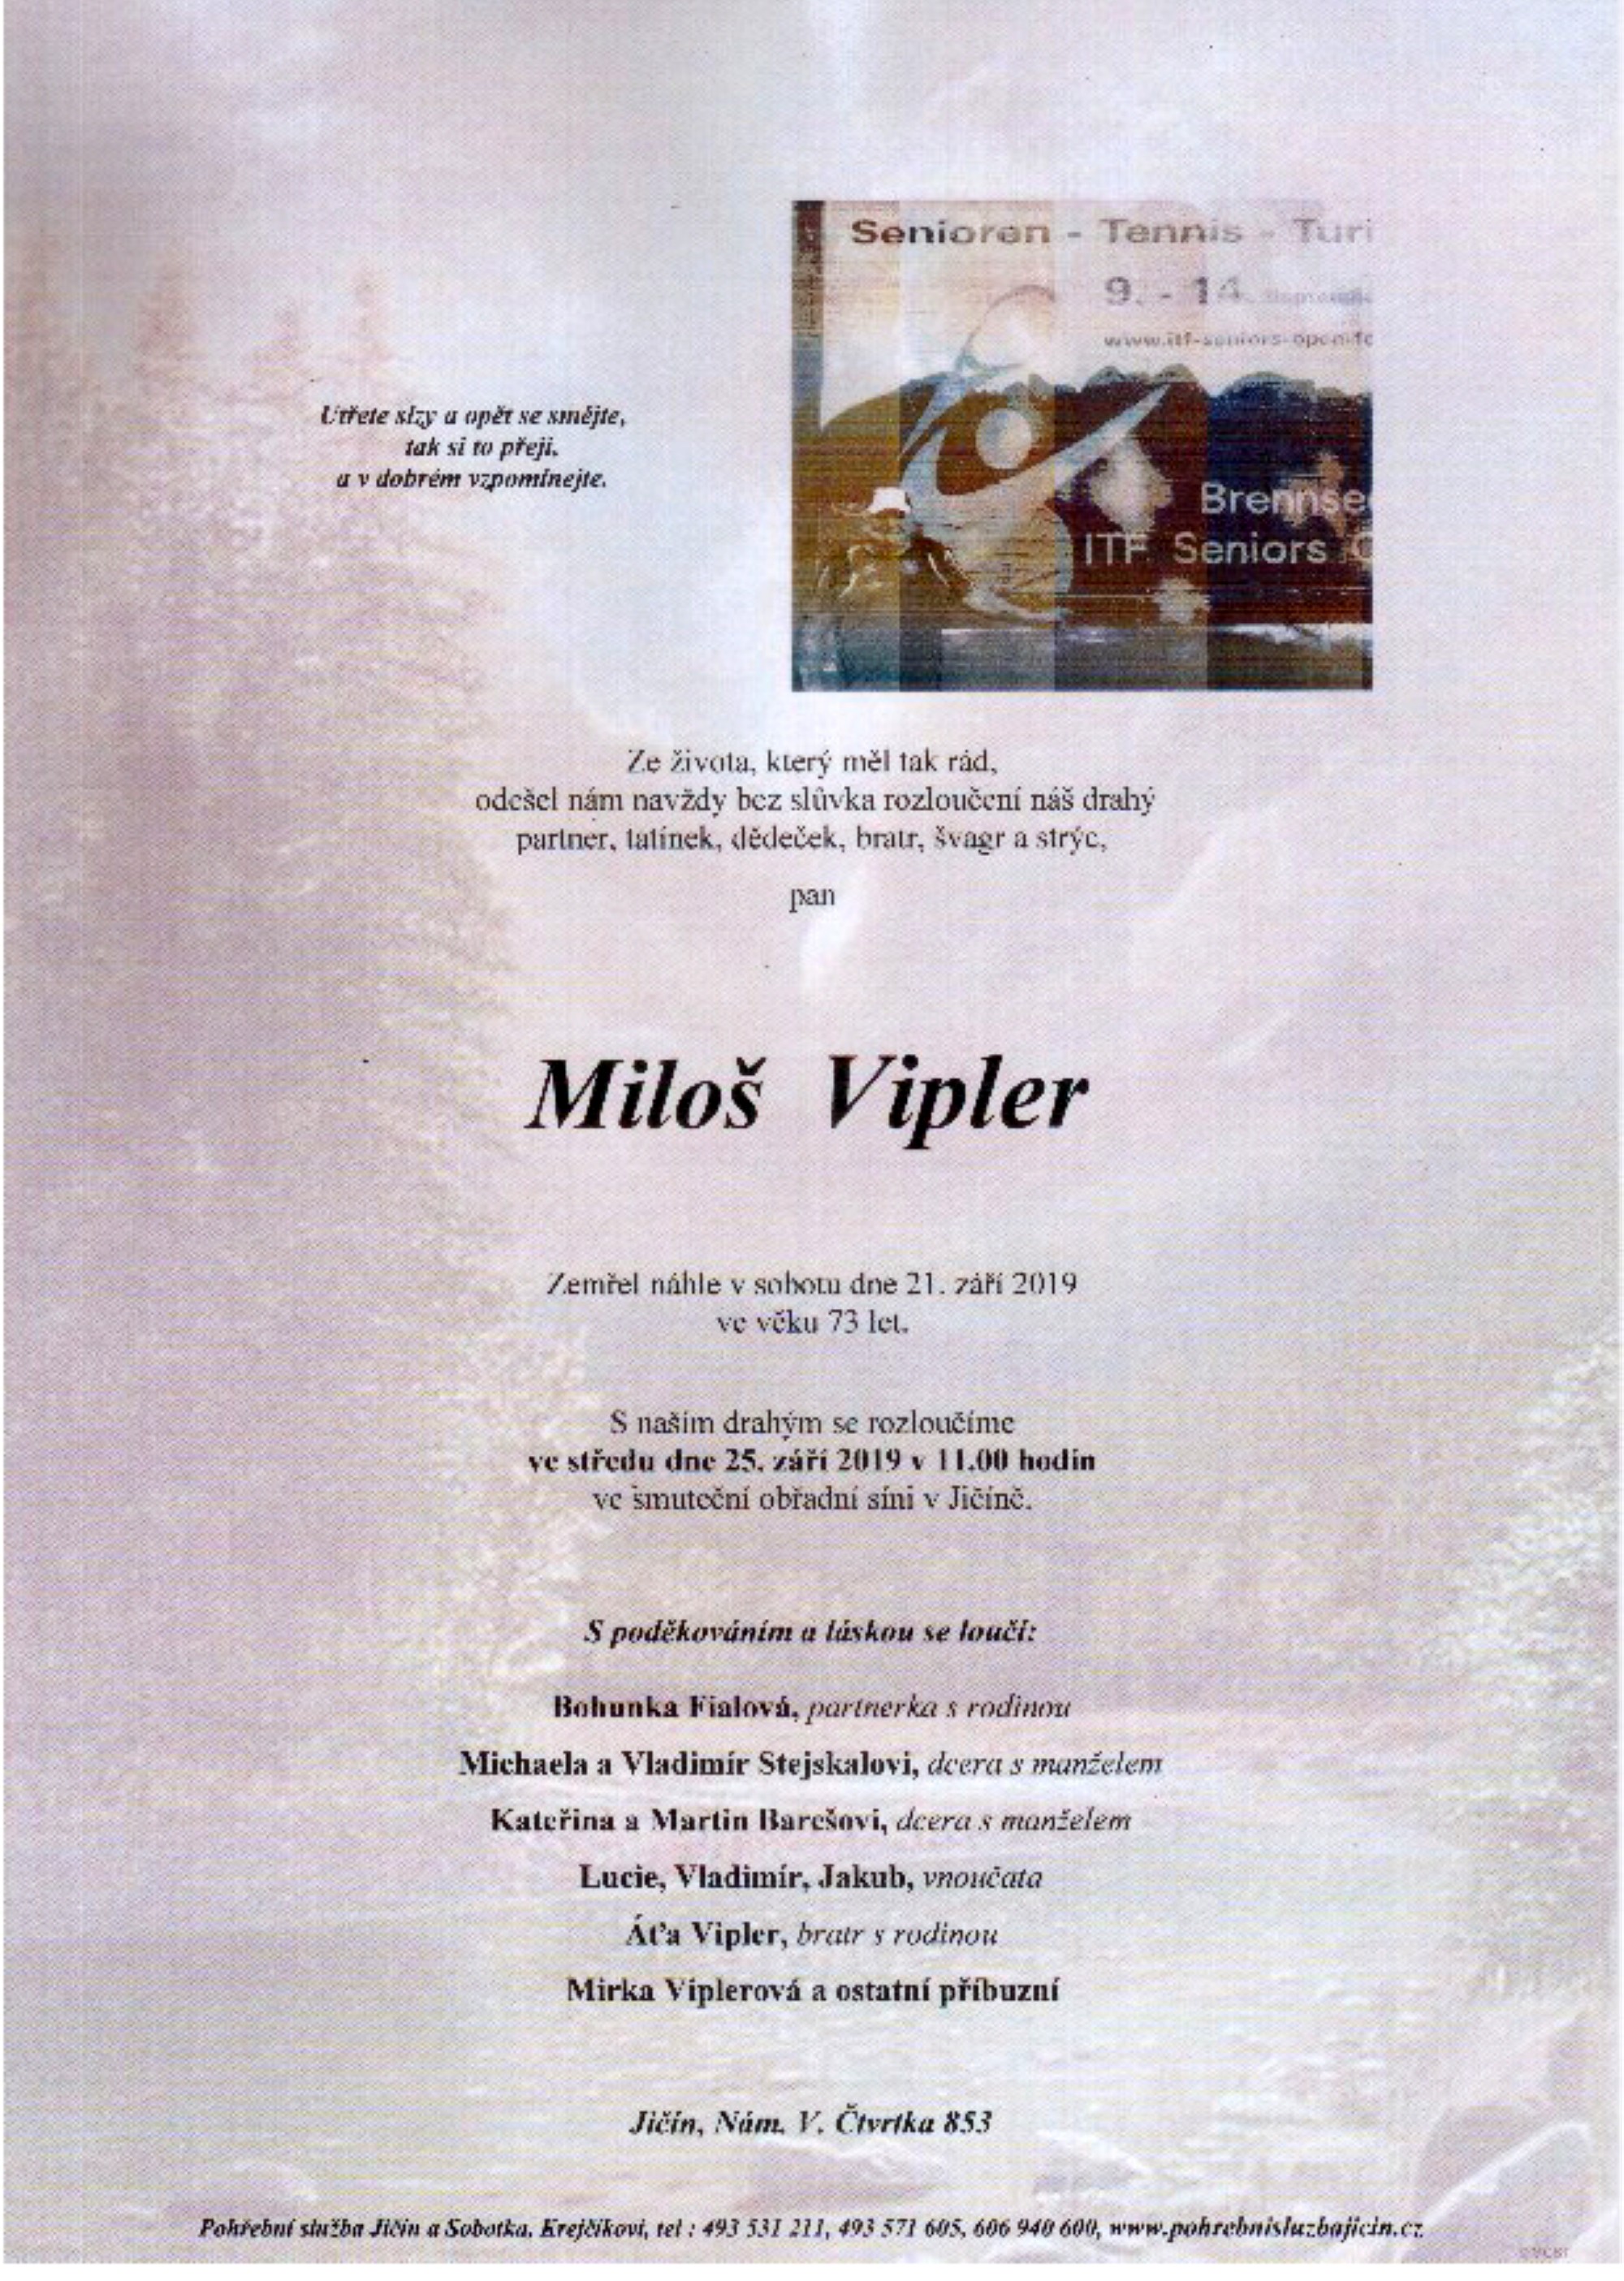 Miloš Vipler